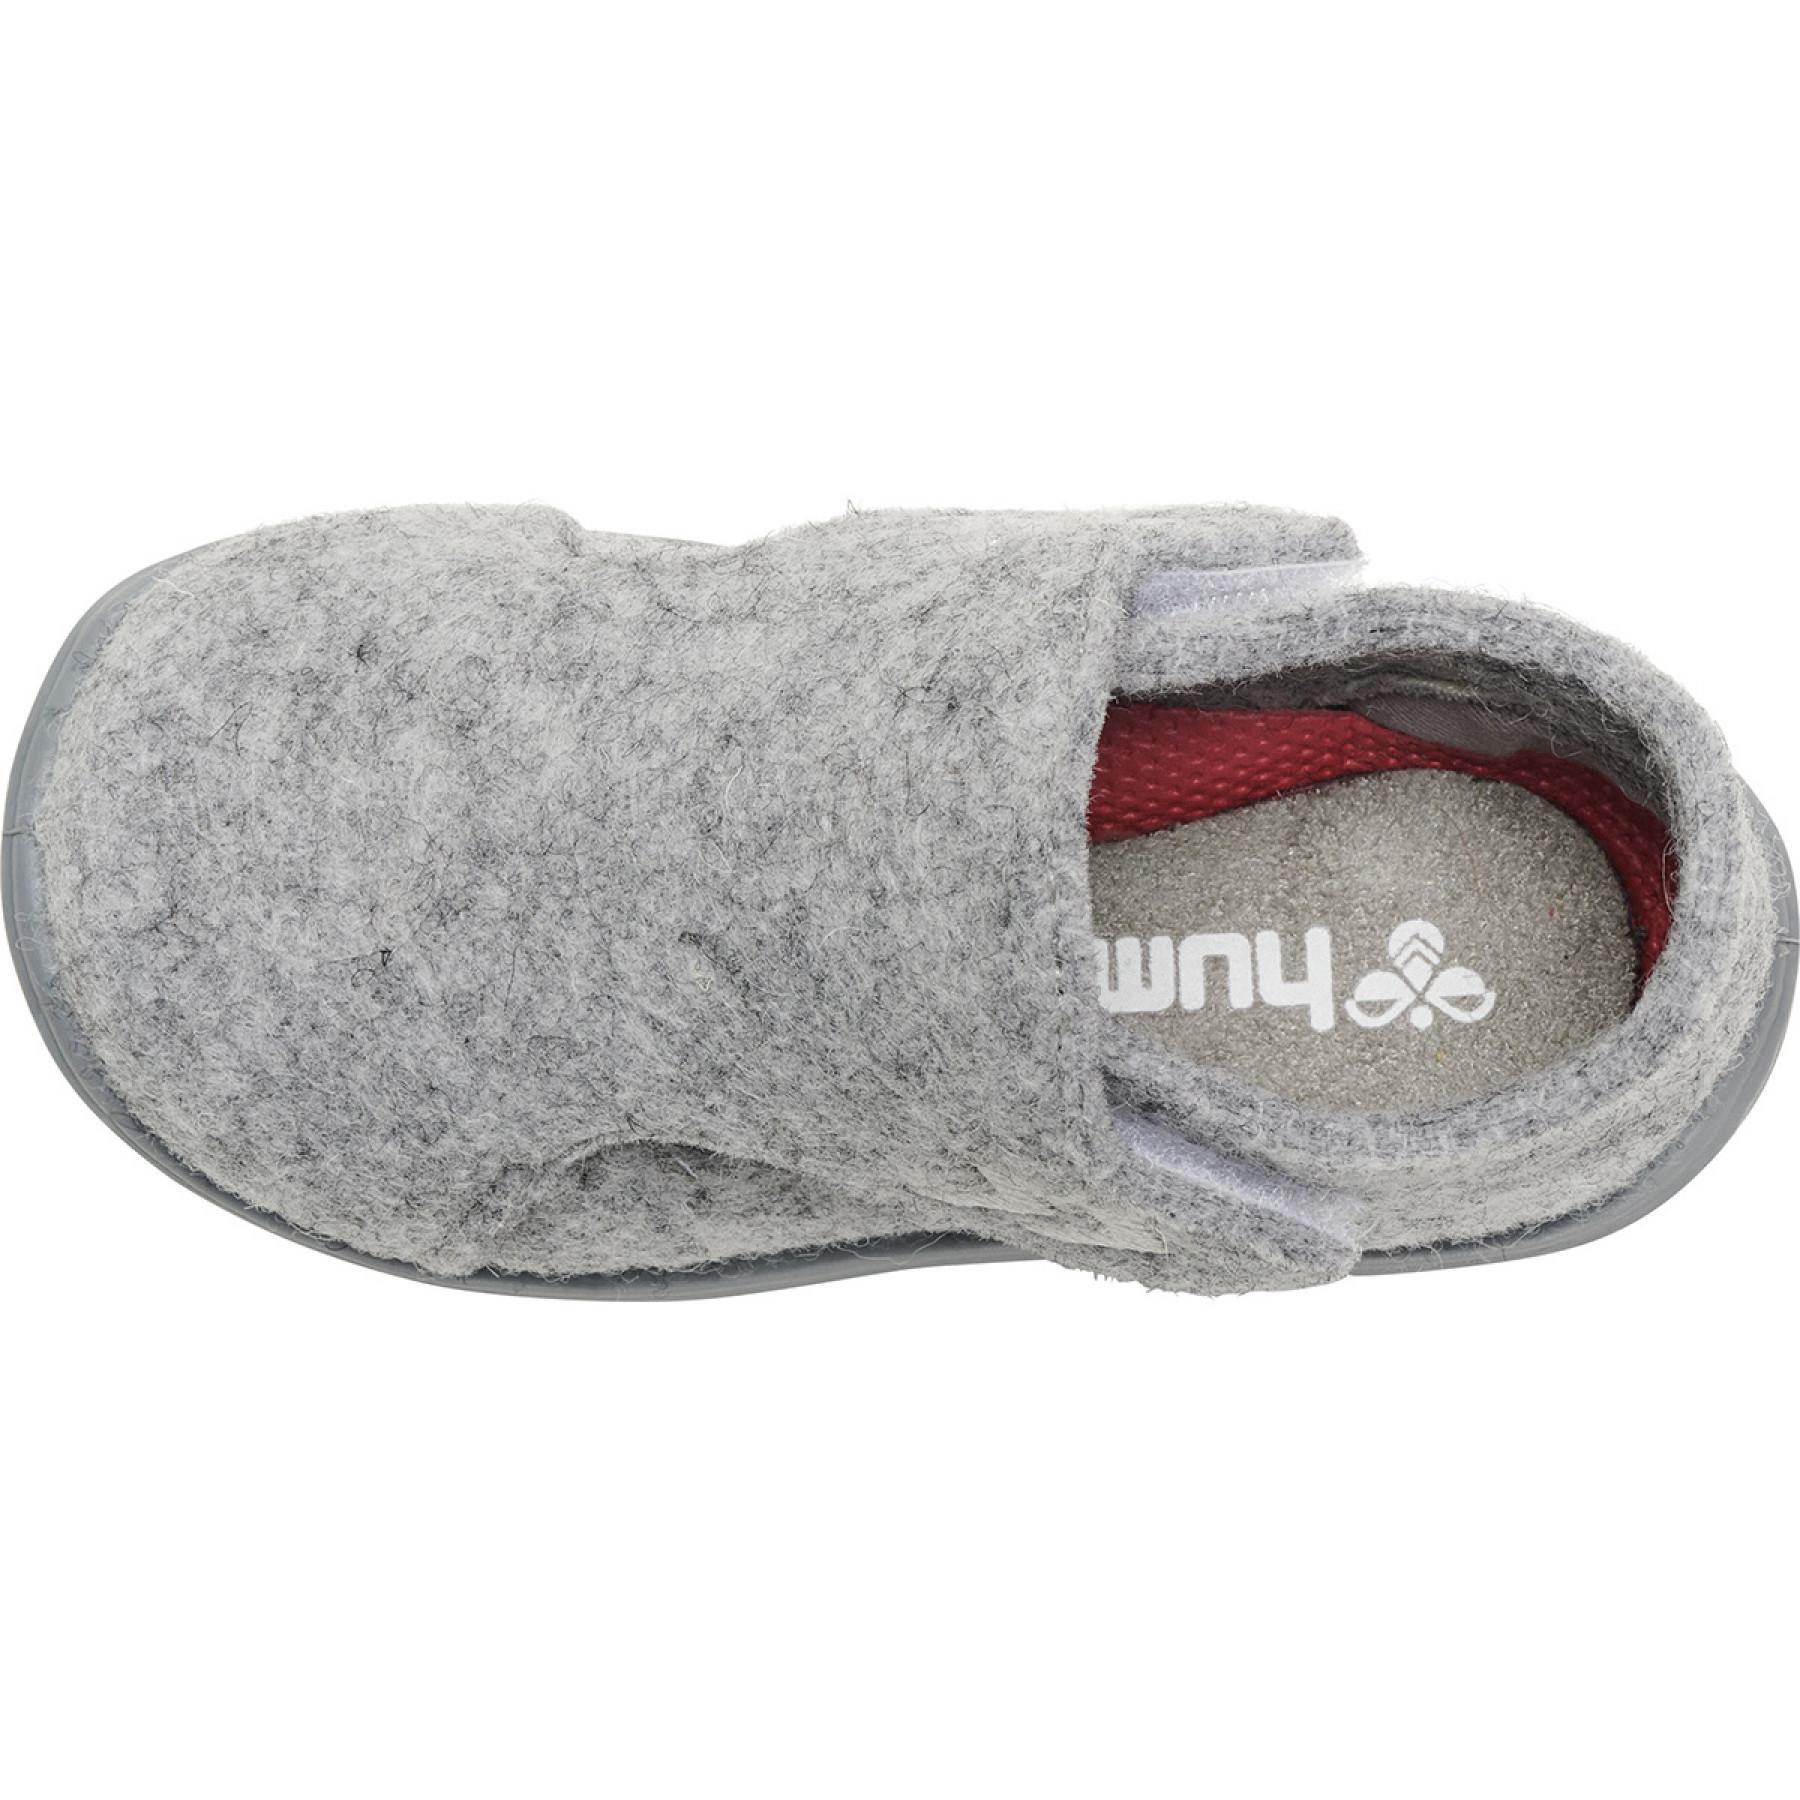 Scarpe per bambini Hummel wool slipper